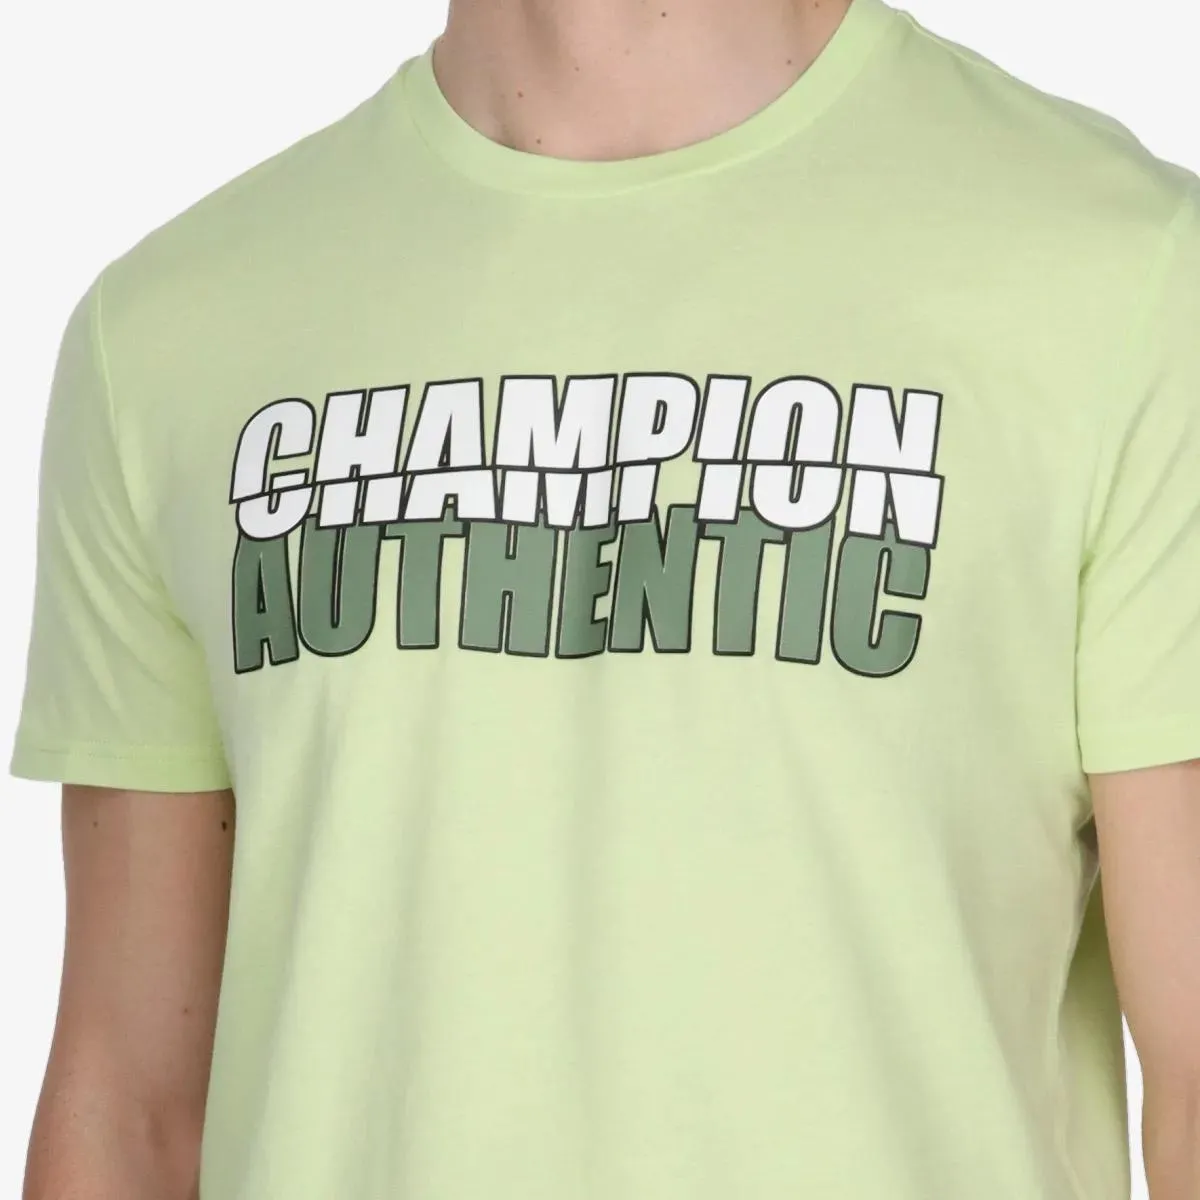 Champion T-shirt AUTHENTIC 